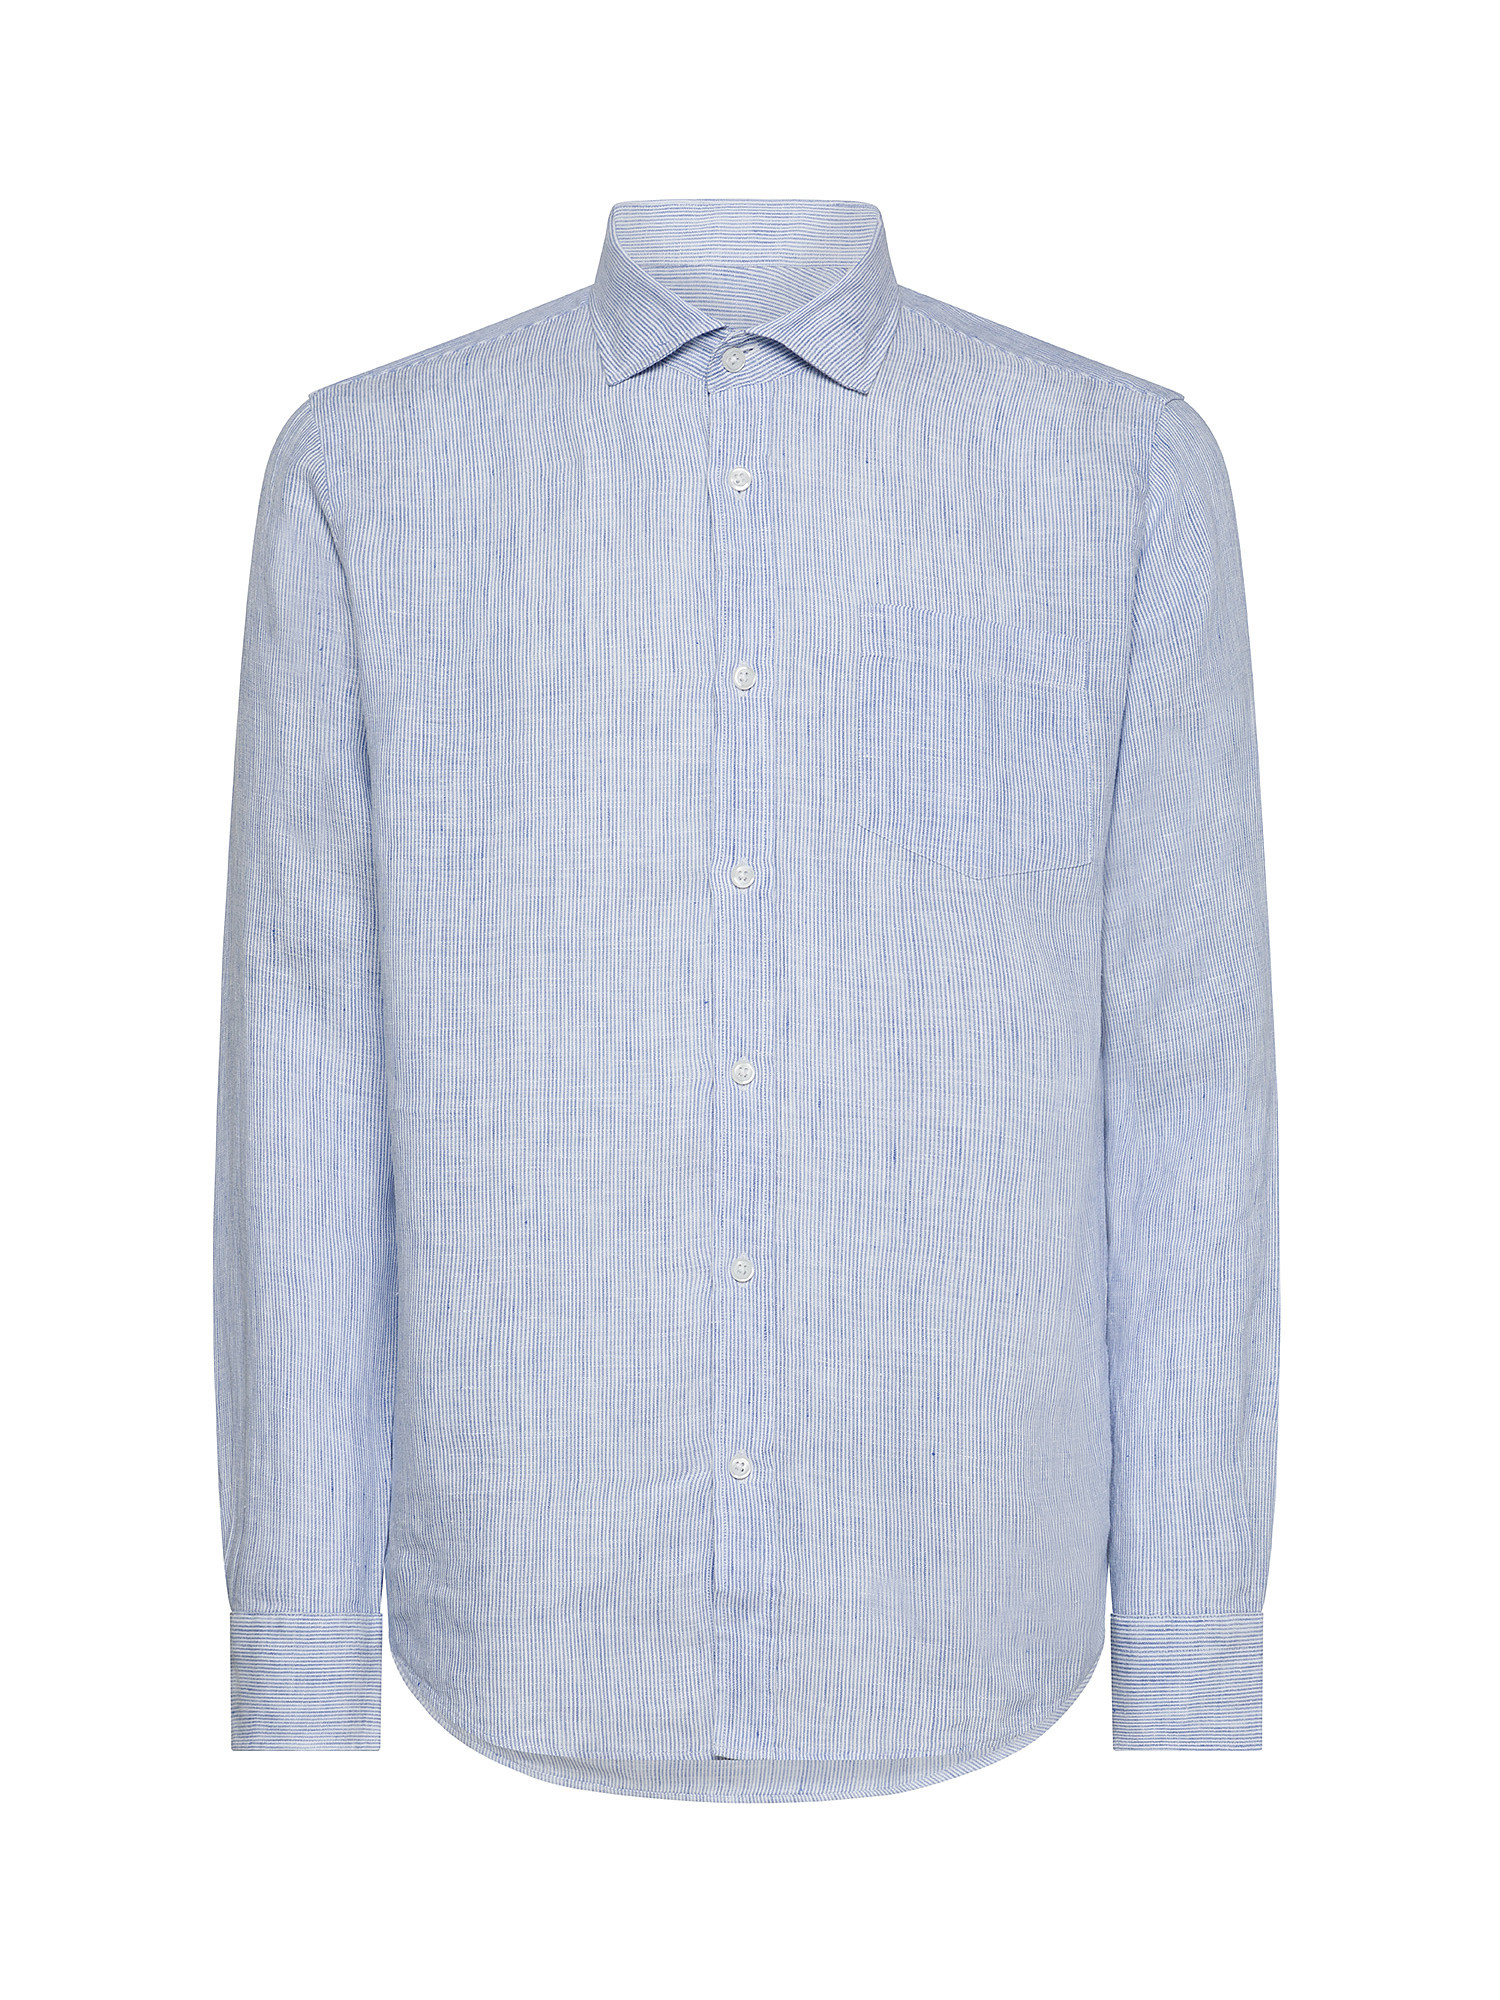 Luca D'Altieri - Camicia tailor fit in puro lino, Blu, large image number 0